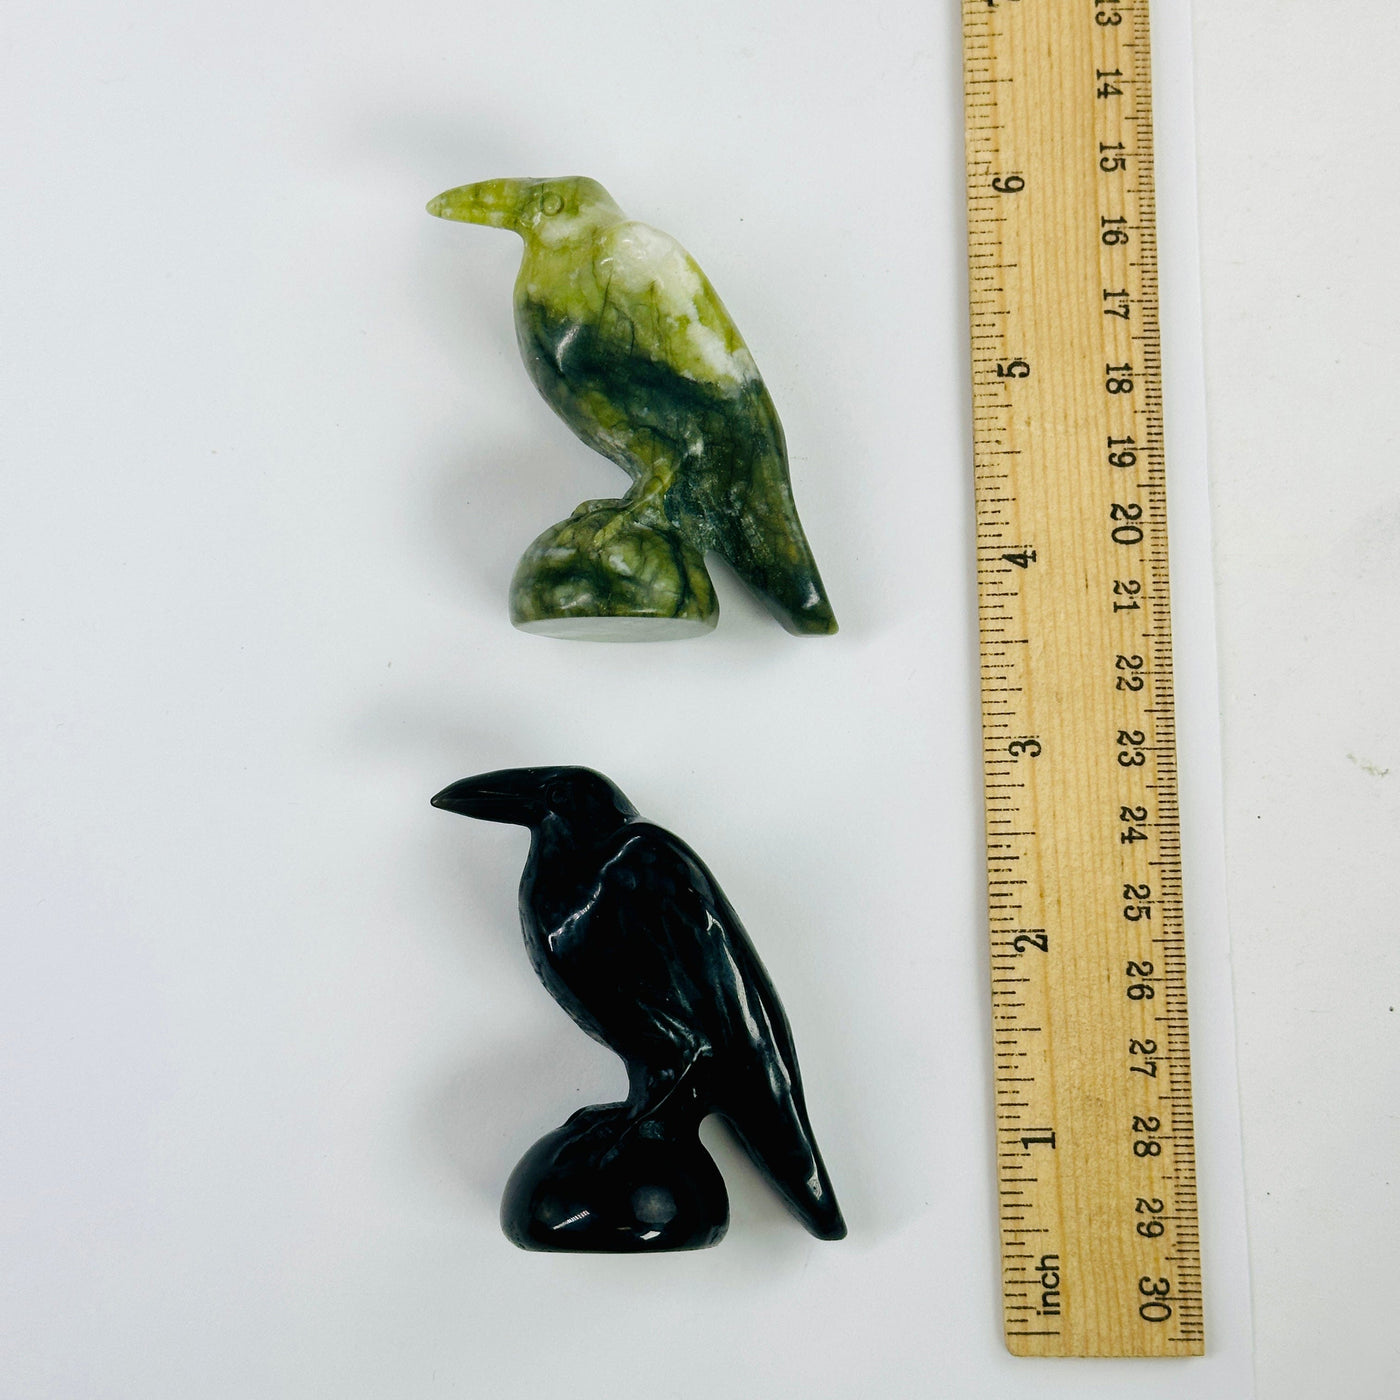 Gemstone Raven - Carved Raven - 1 green jadeite raven and 1 black obsidian raven next to ruler for size reference